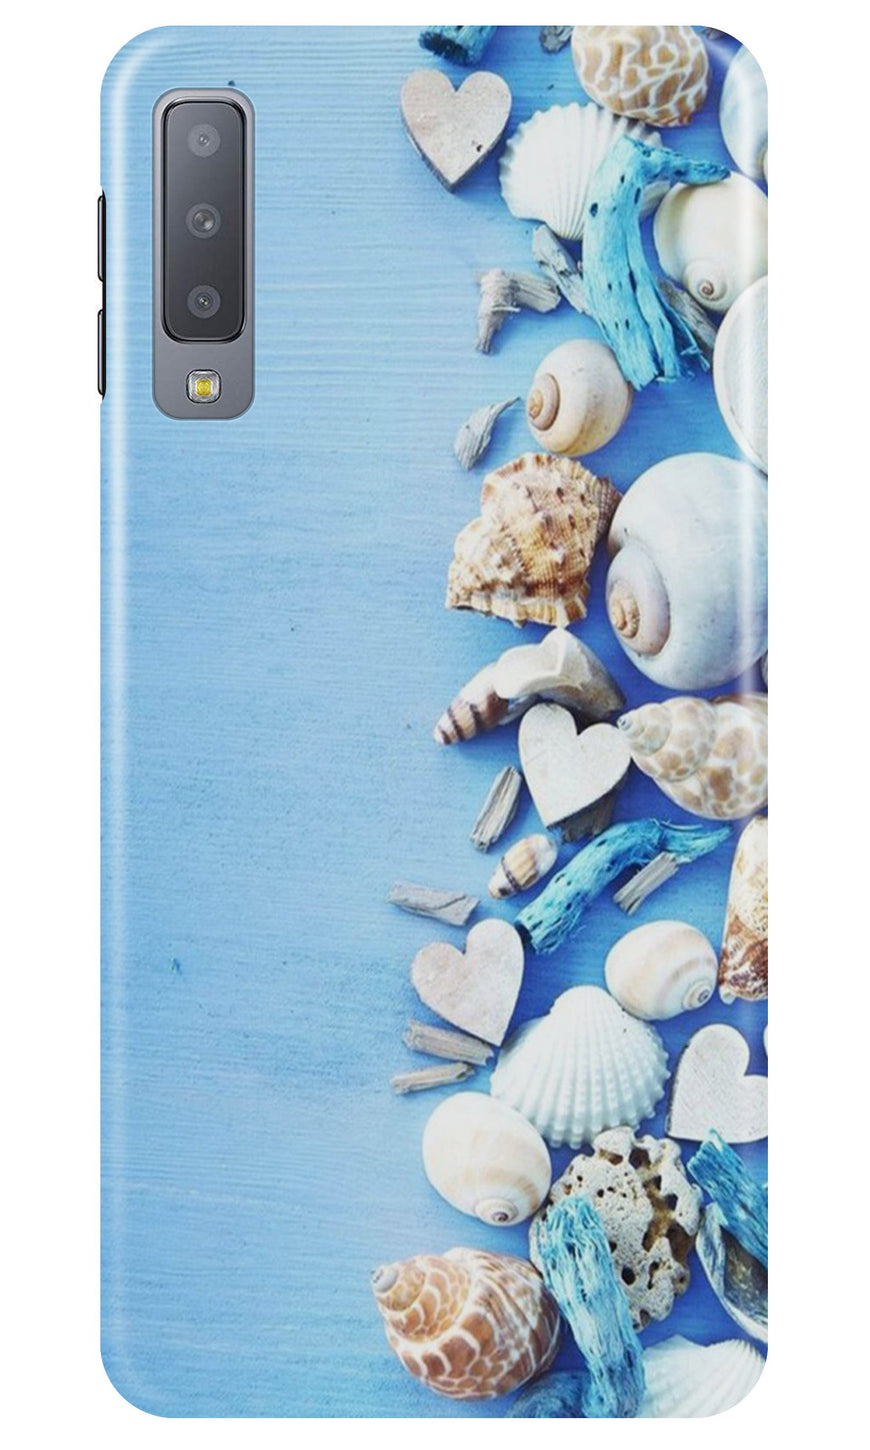 Sea Shells2 Case for Samsung A50